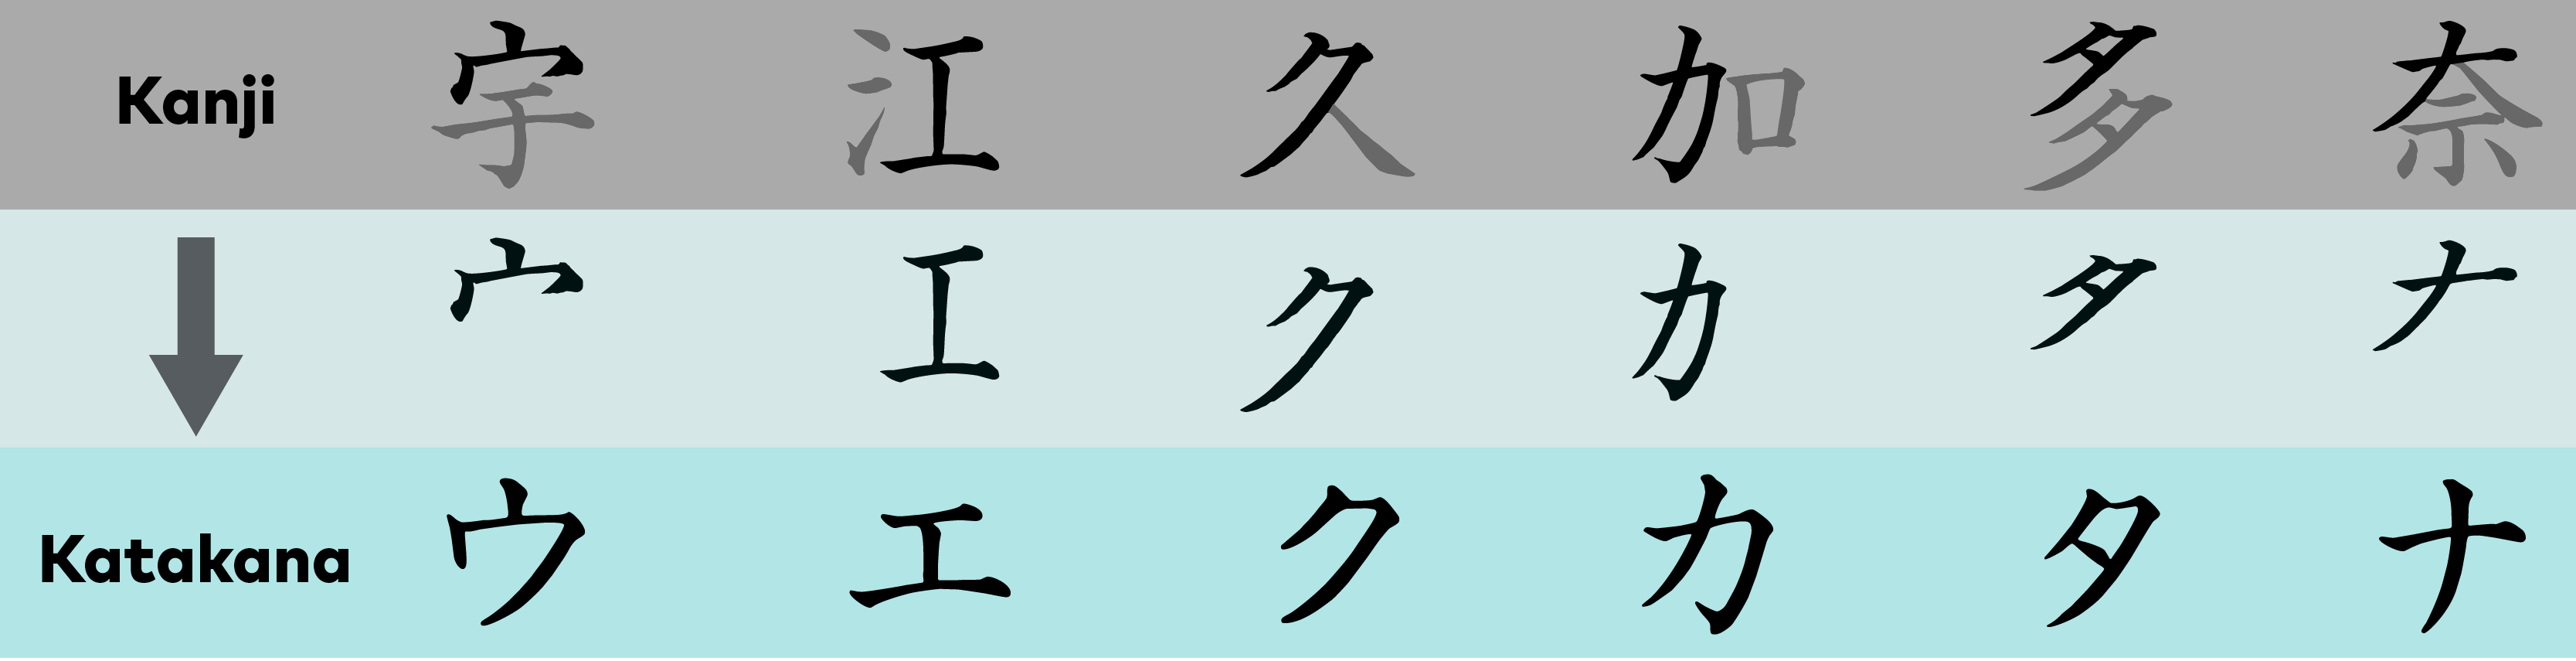 Model of development of contemporary katakana